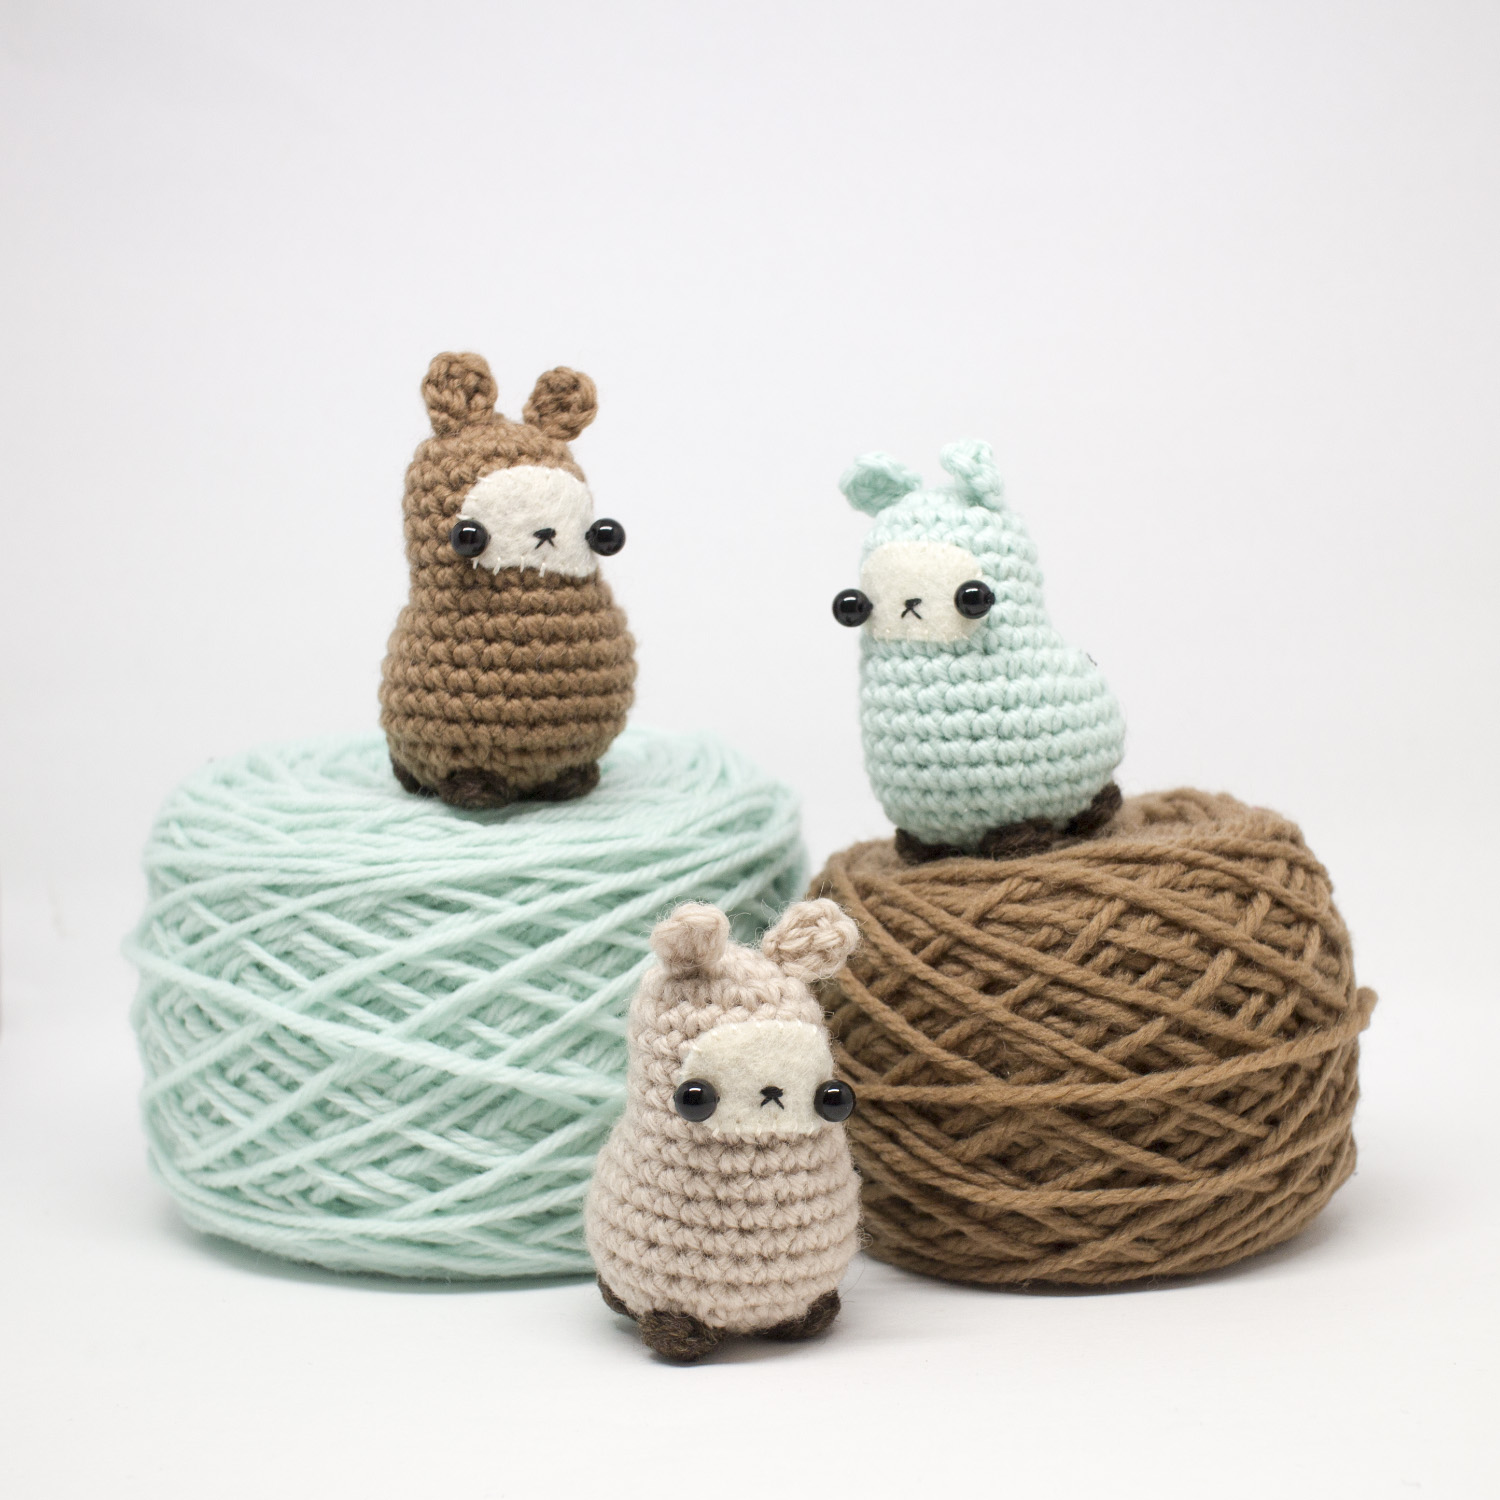 Amigurumi Llama Crochet Pattern